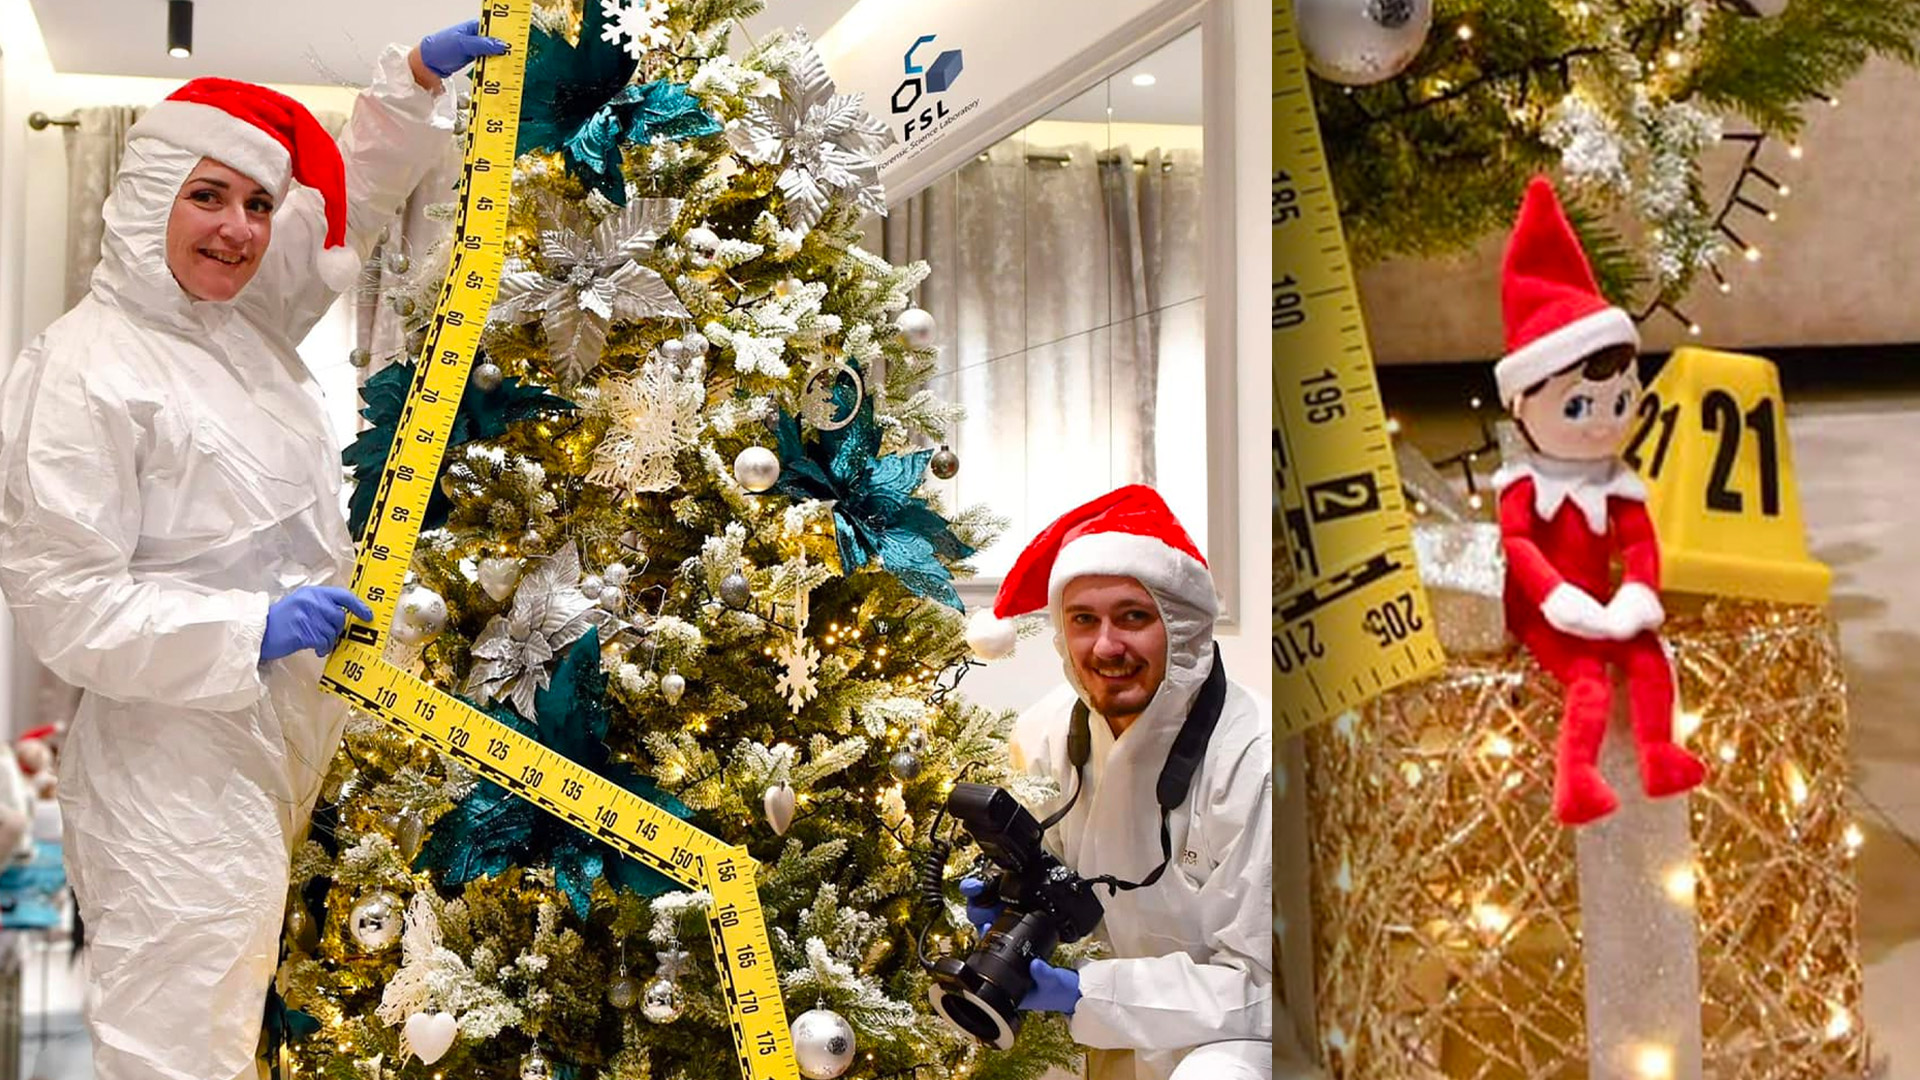 Malta Police Win Christmas With Elf On The Shelf Crime Scene